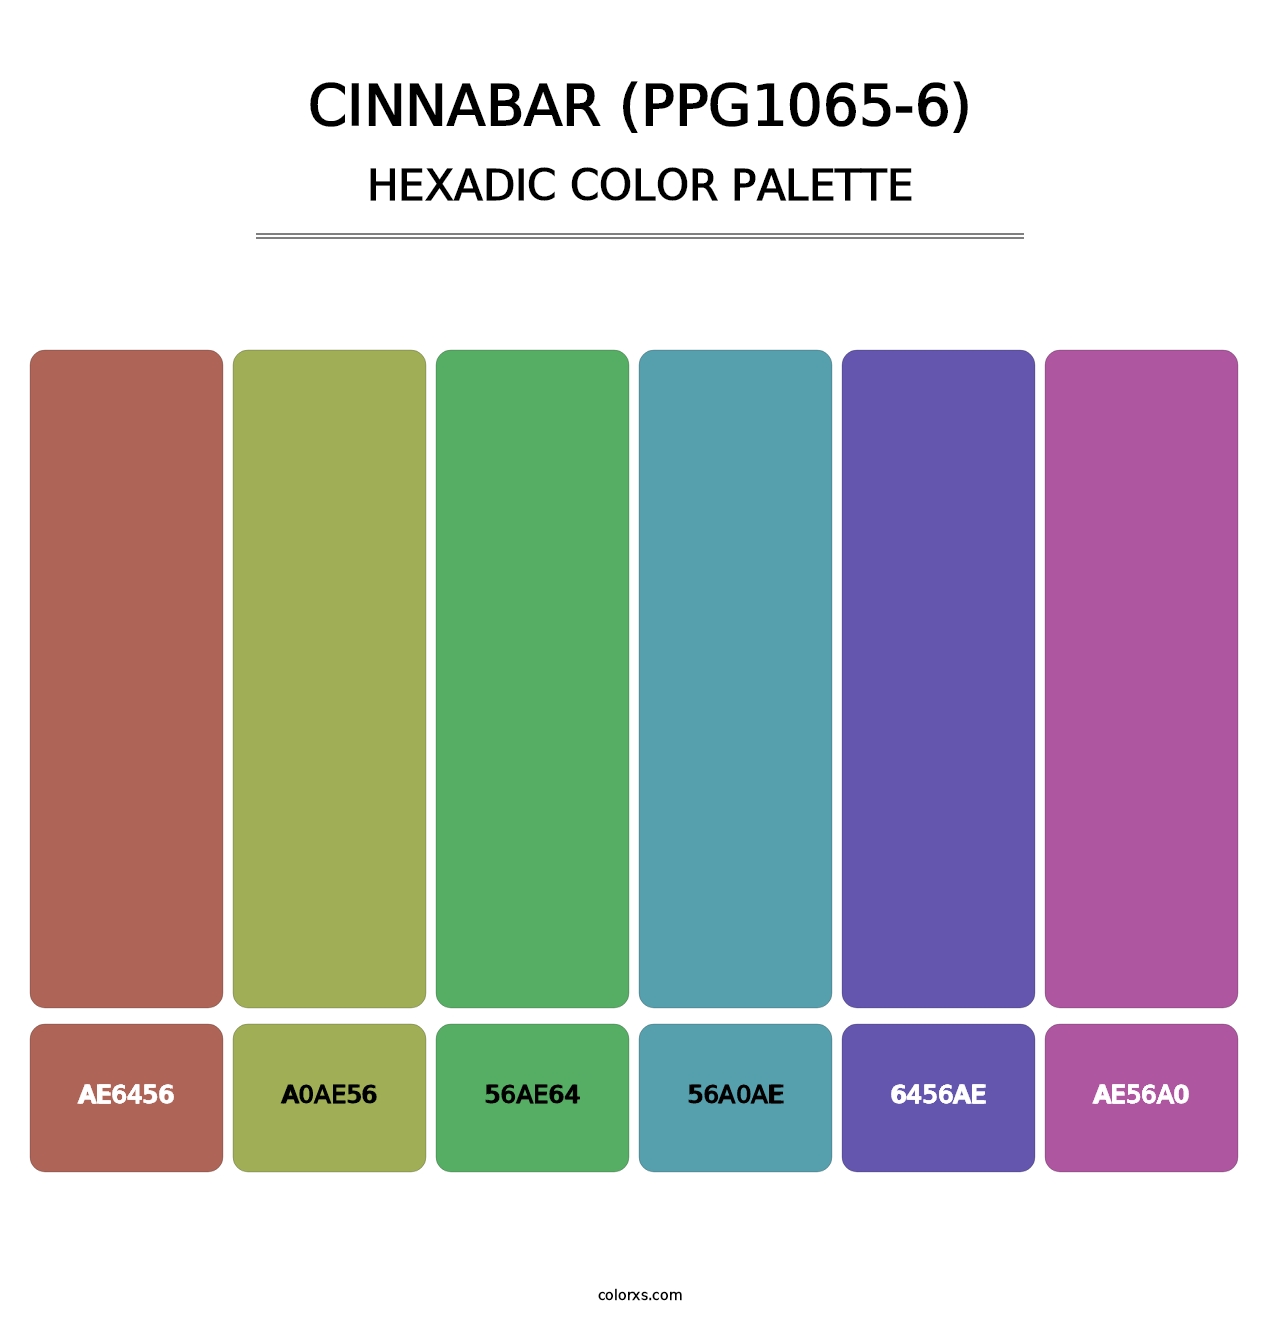 Cinnabar (PPG1065-6) - Hexadic Color Palette